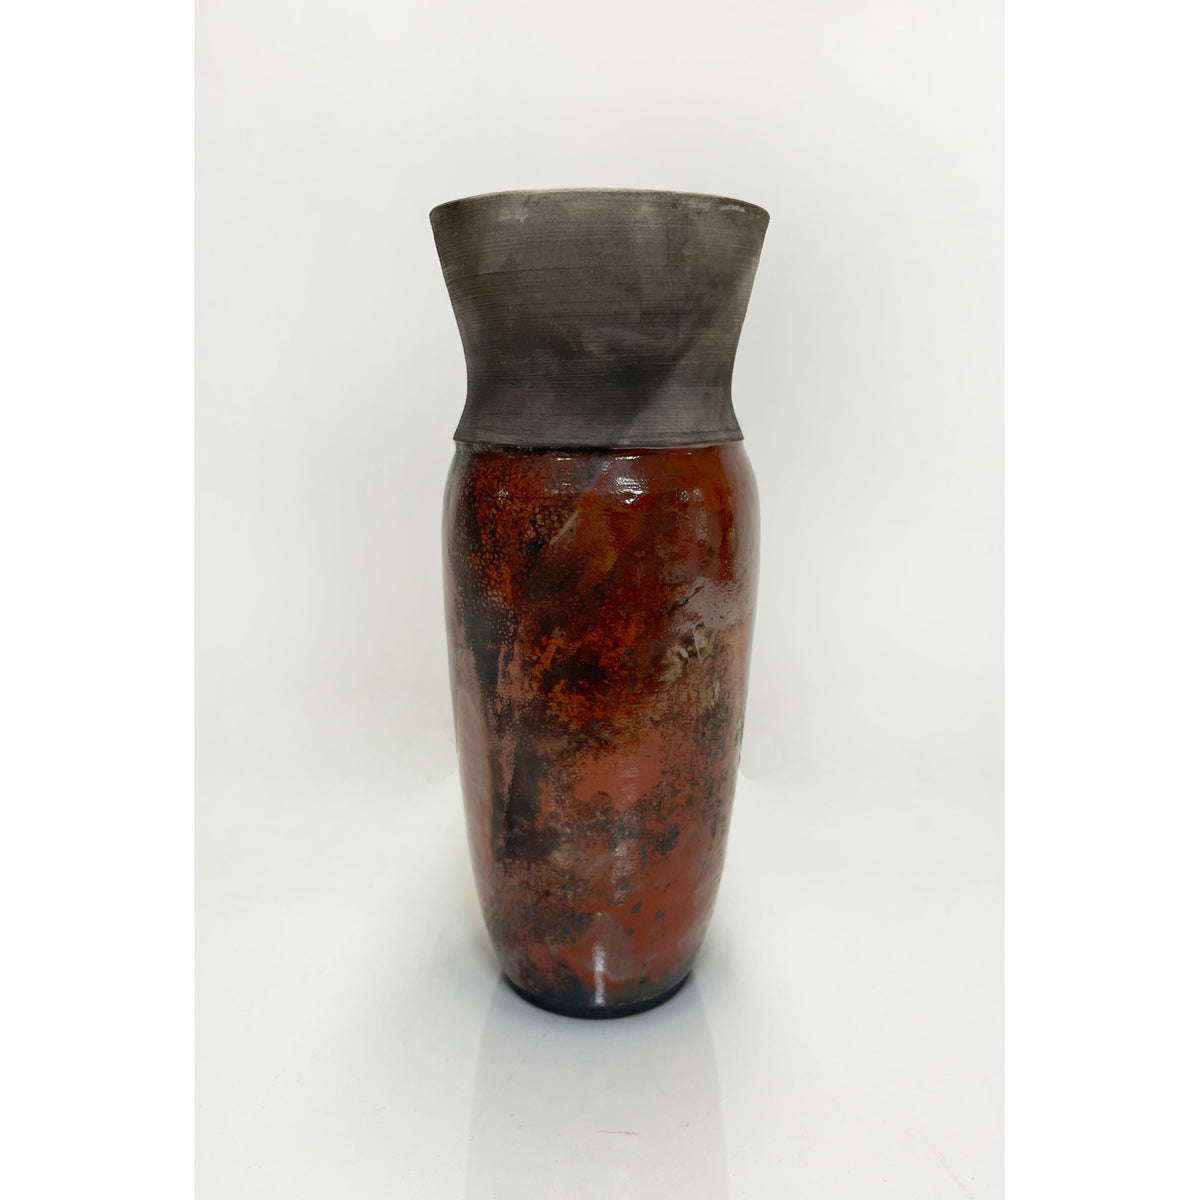 Catherine Harasymiw - Tall Orange Vase, 11" x 5" x 5"